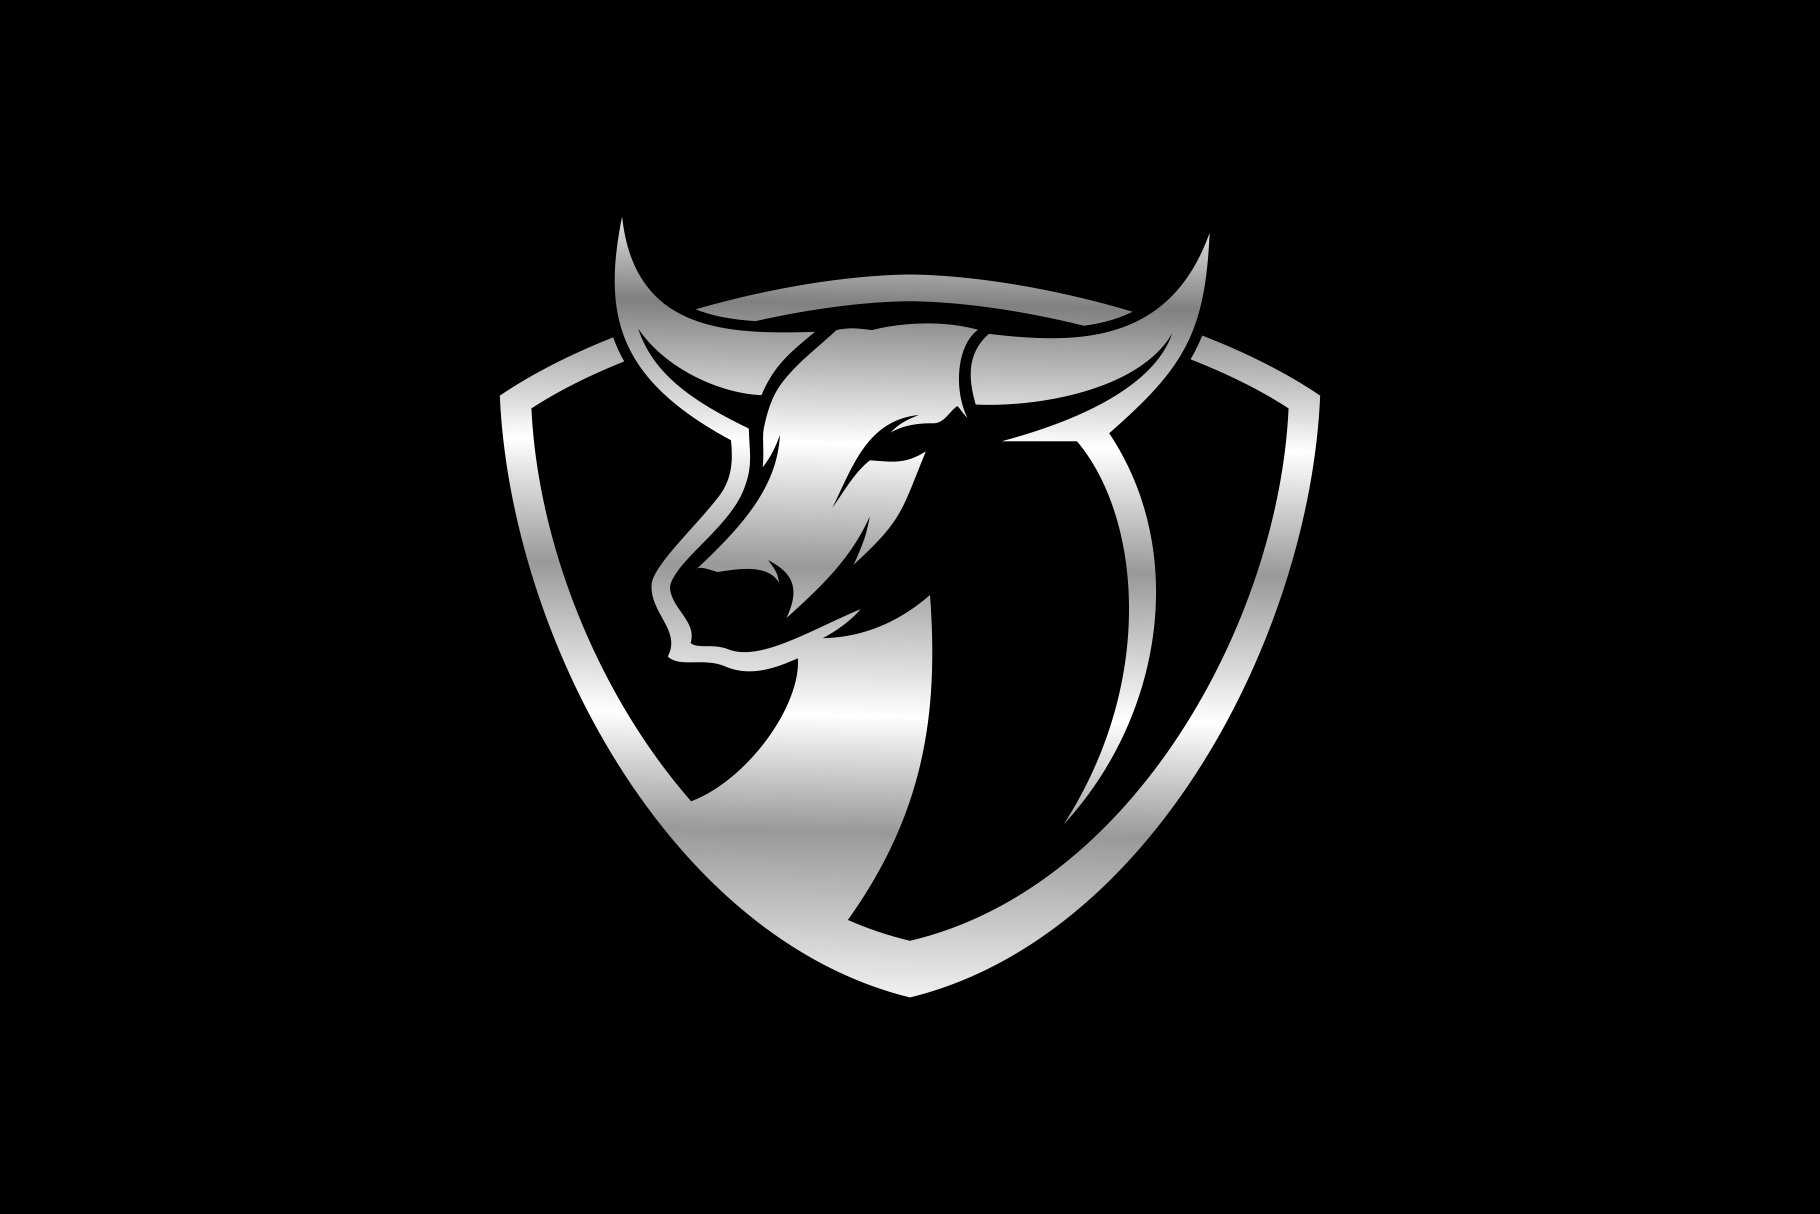 Bull logo template cover image.